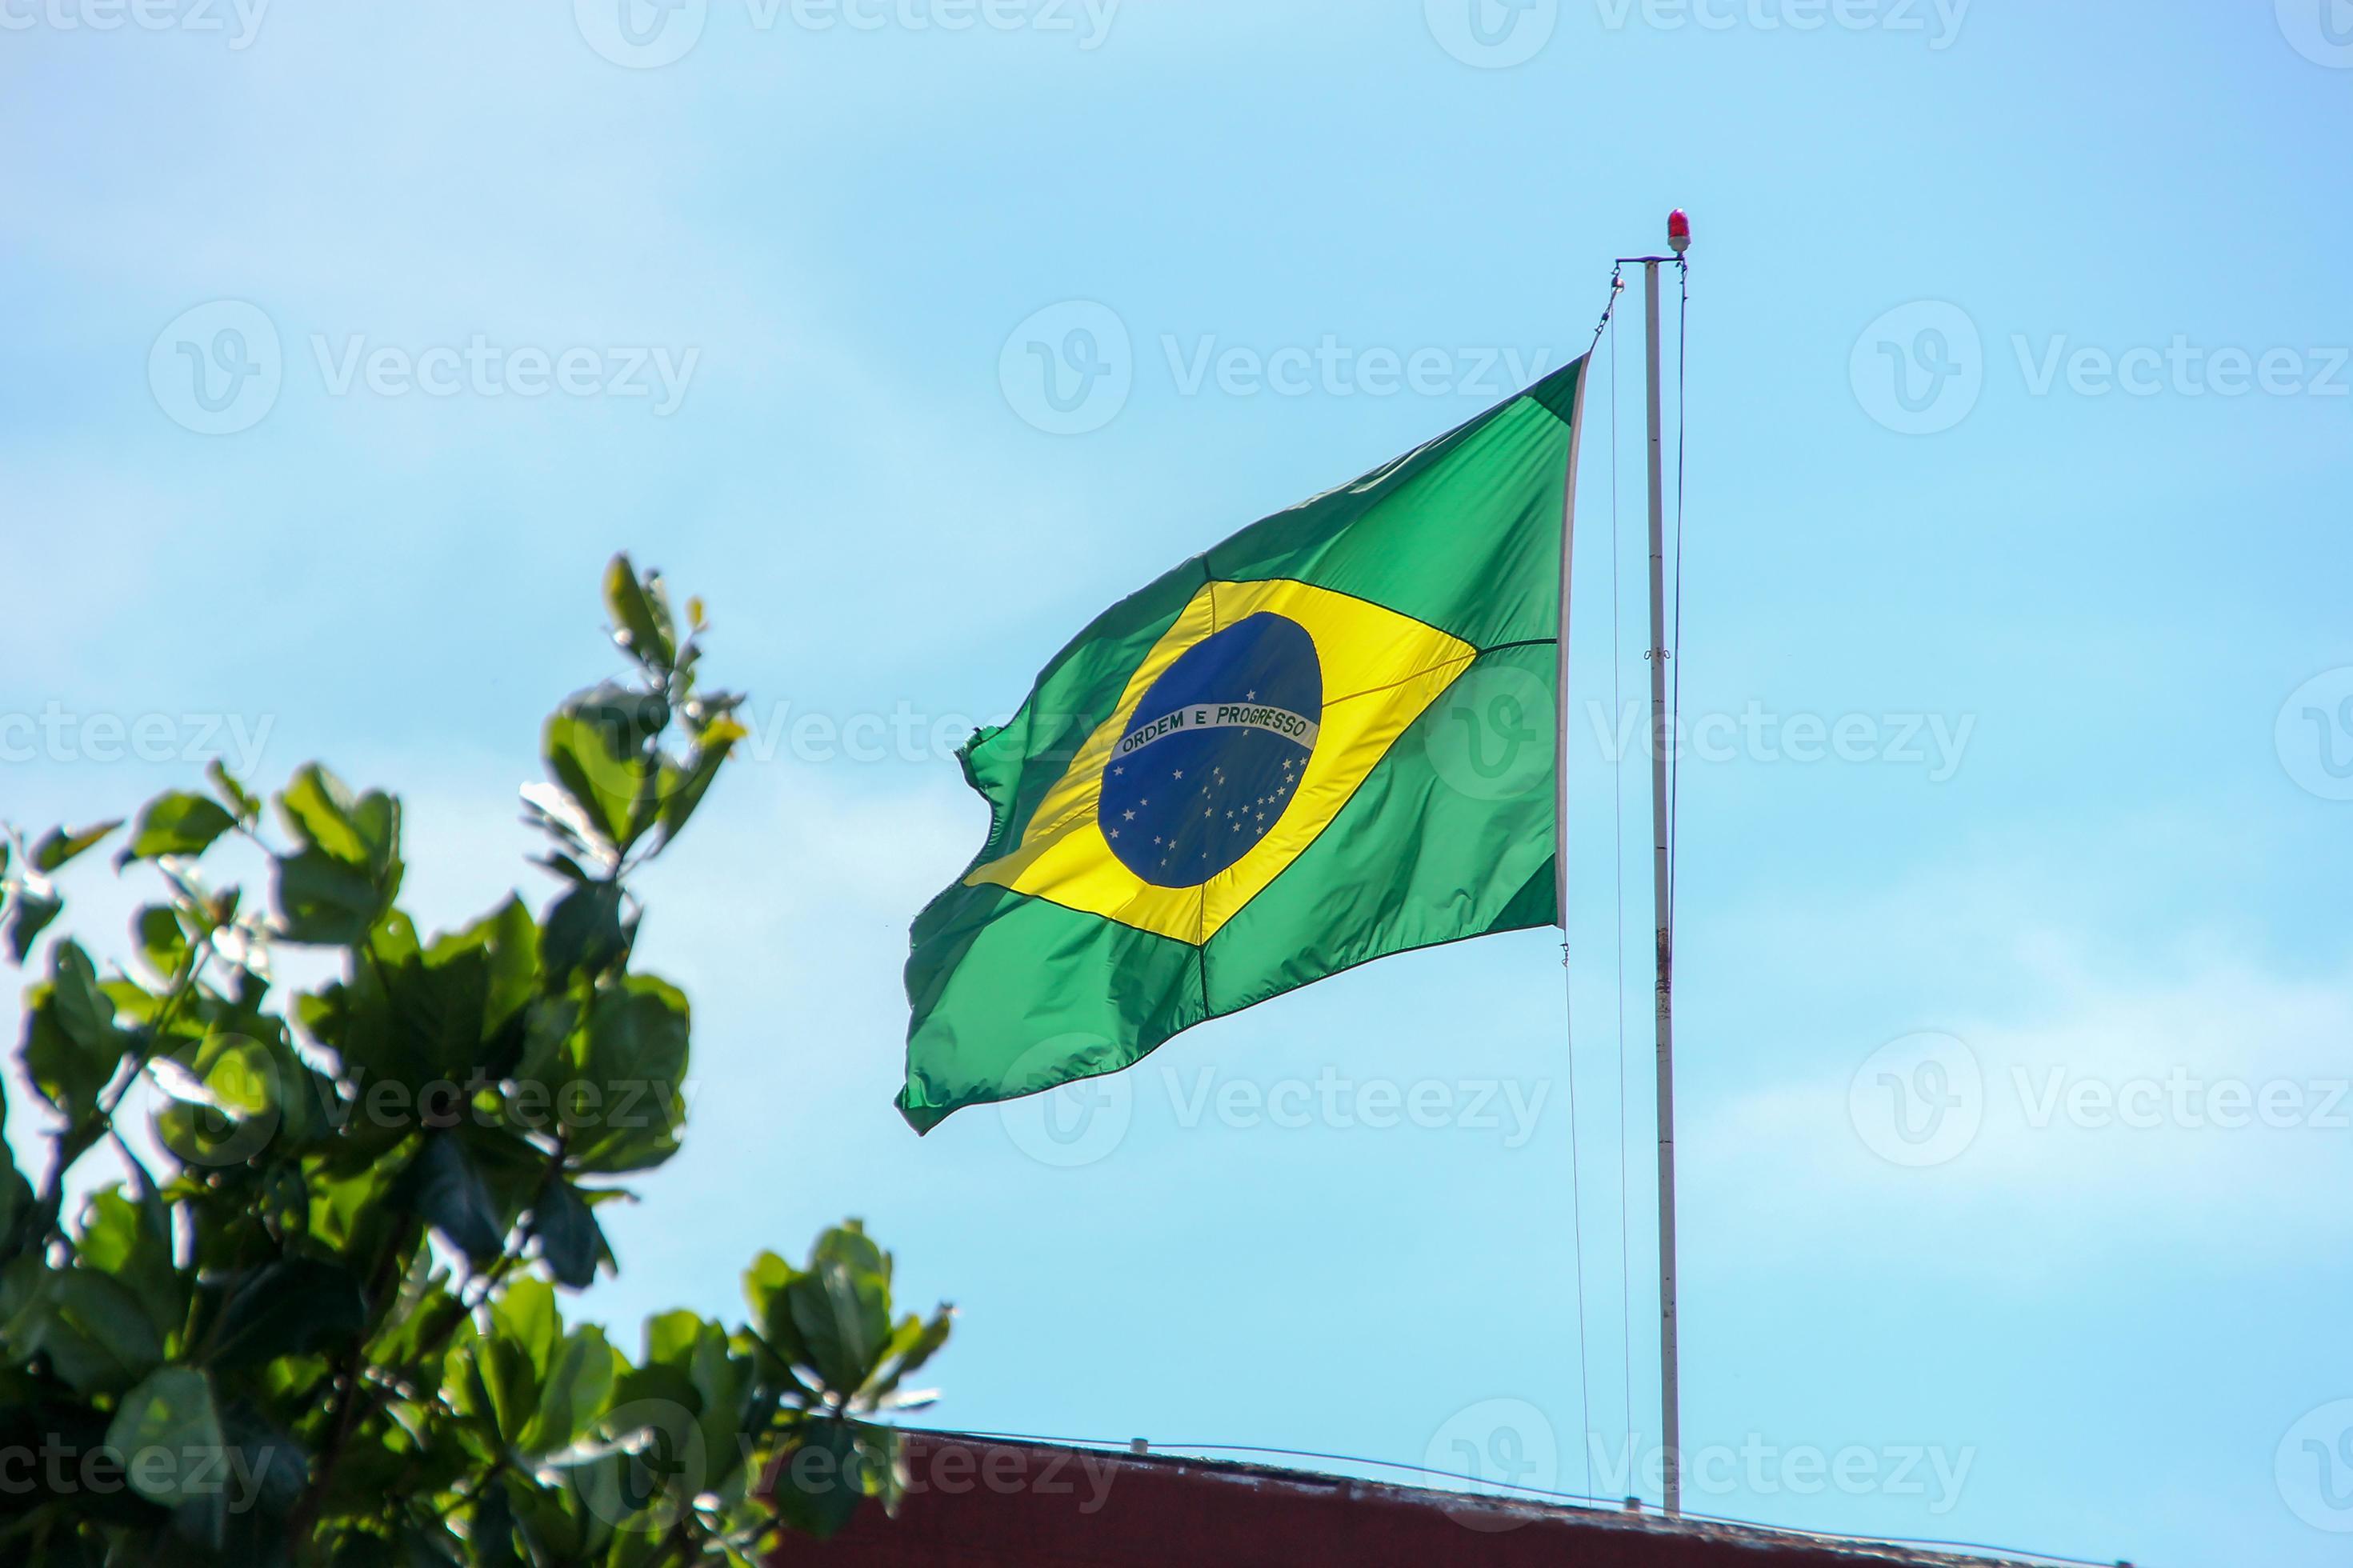 Braziliaanse vlag in de open lucht in rio de janeiro. foto